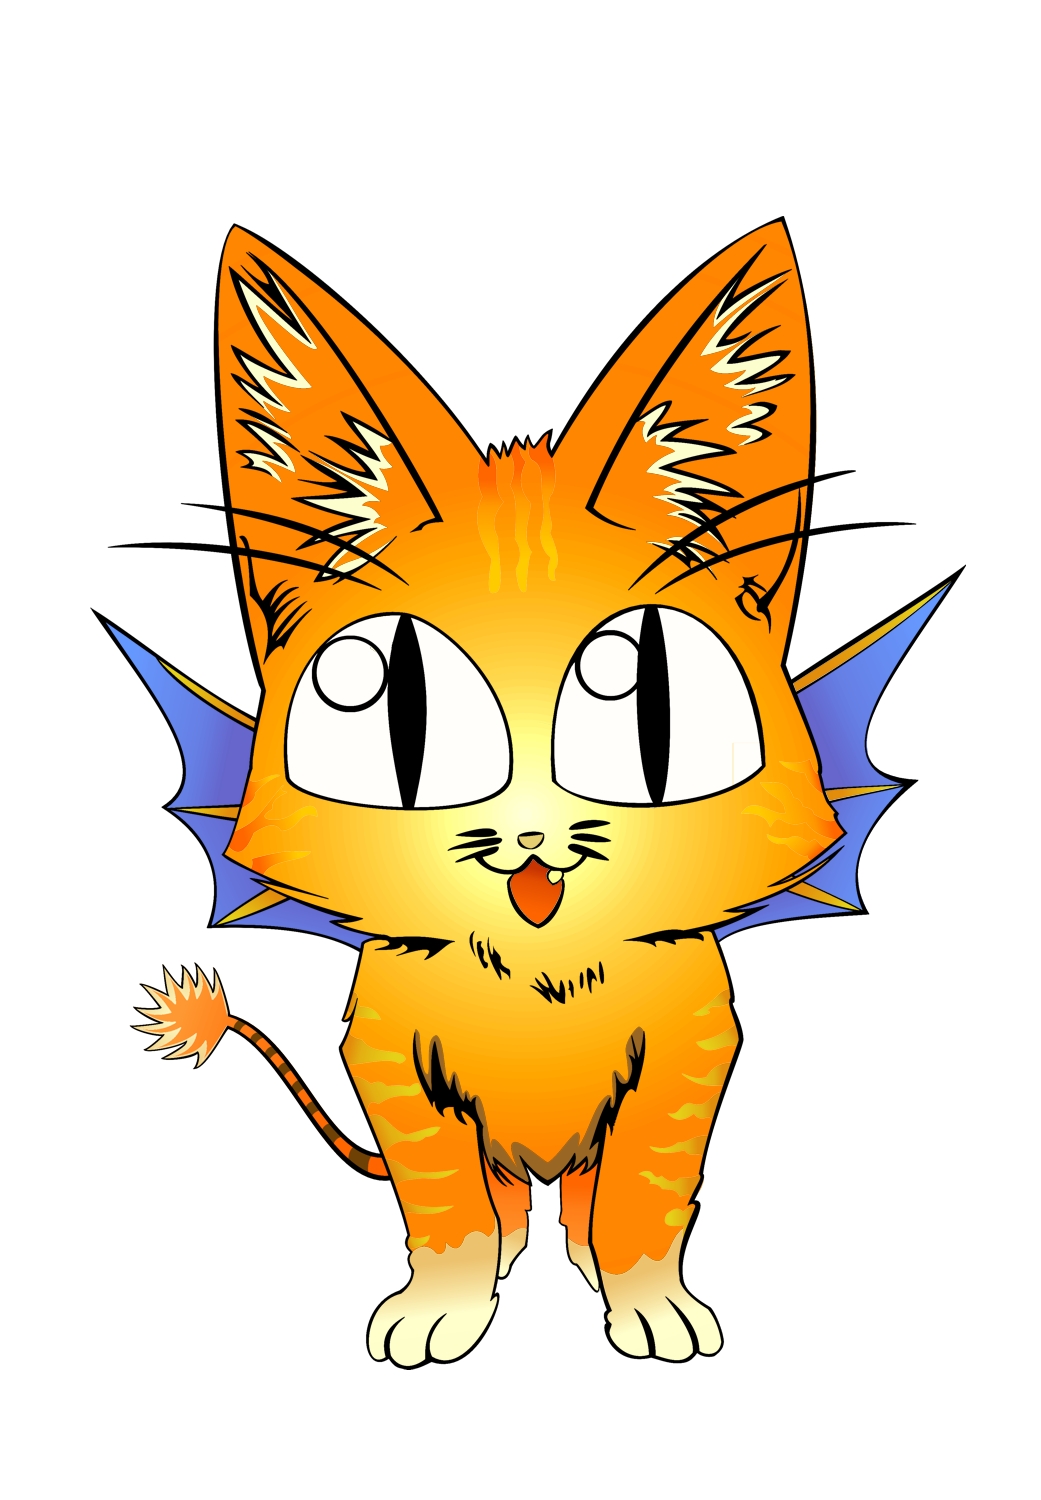 deviantART: More Like Devil Devil Bat cat vector by